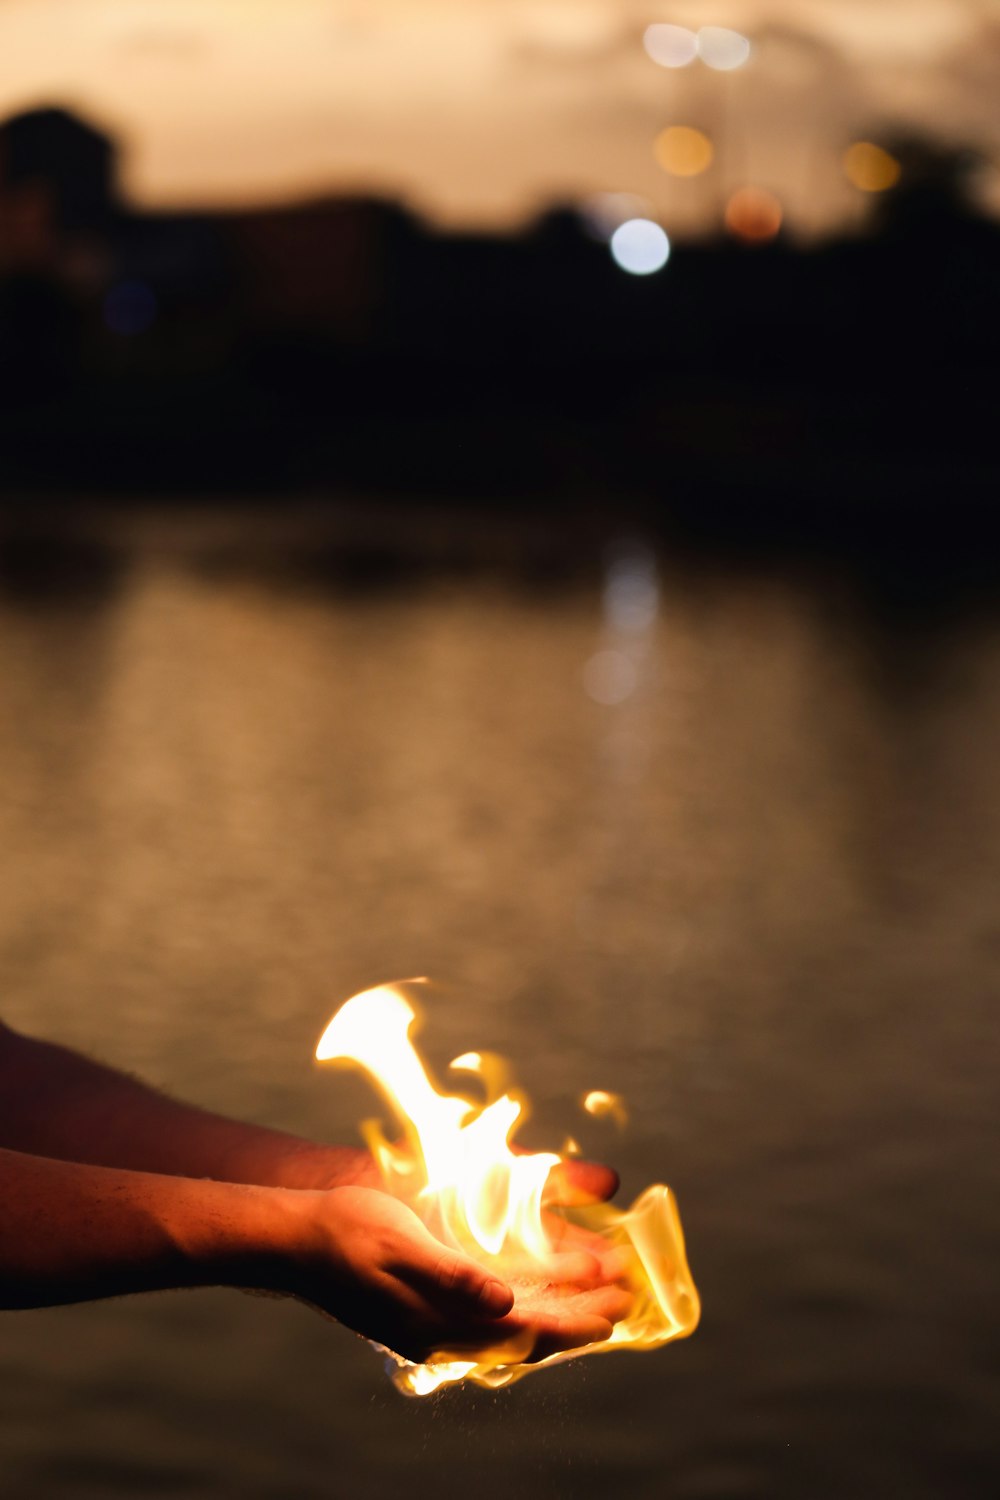 a hand holding a fire